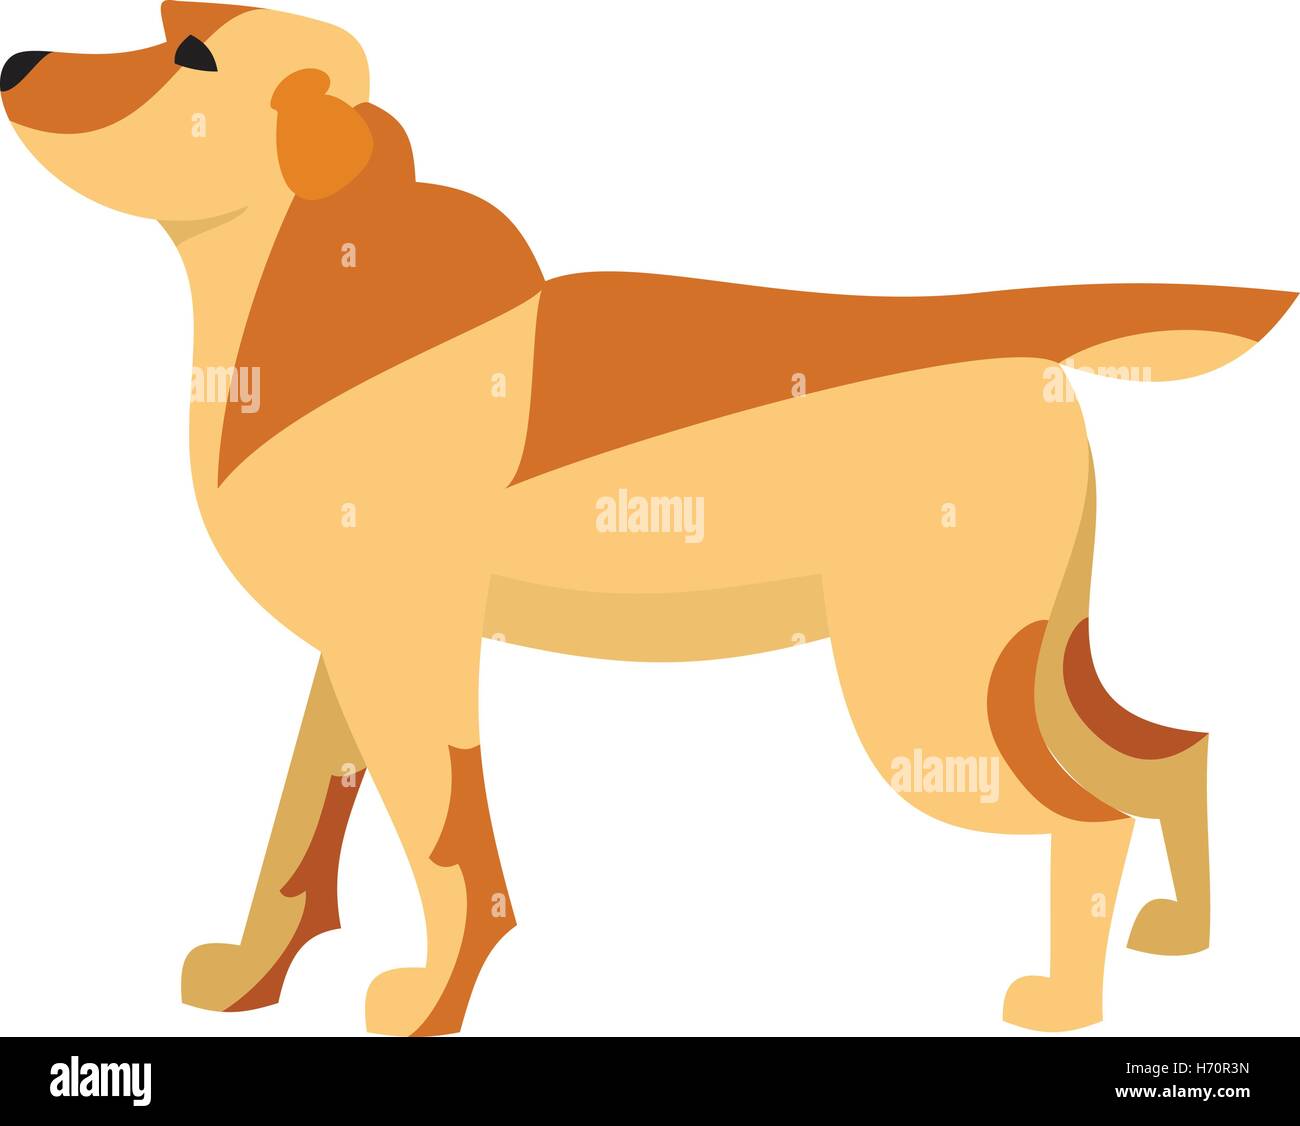 Labrador retriever dog breed and pet animal domestic, vector illustration Stock Vector